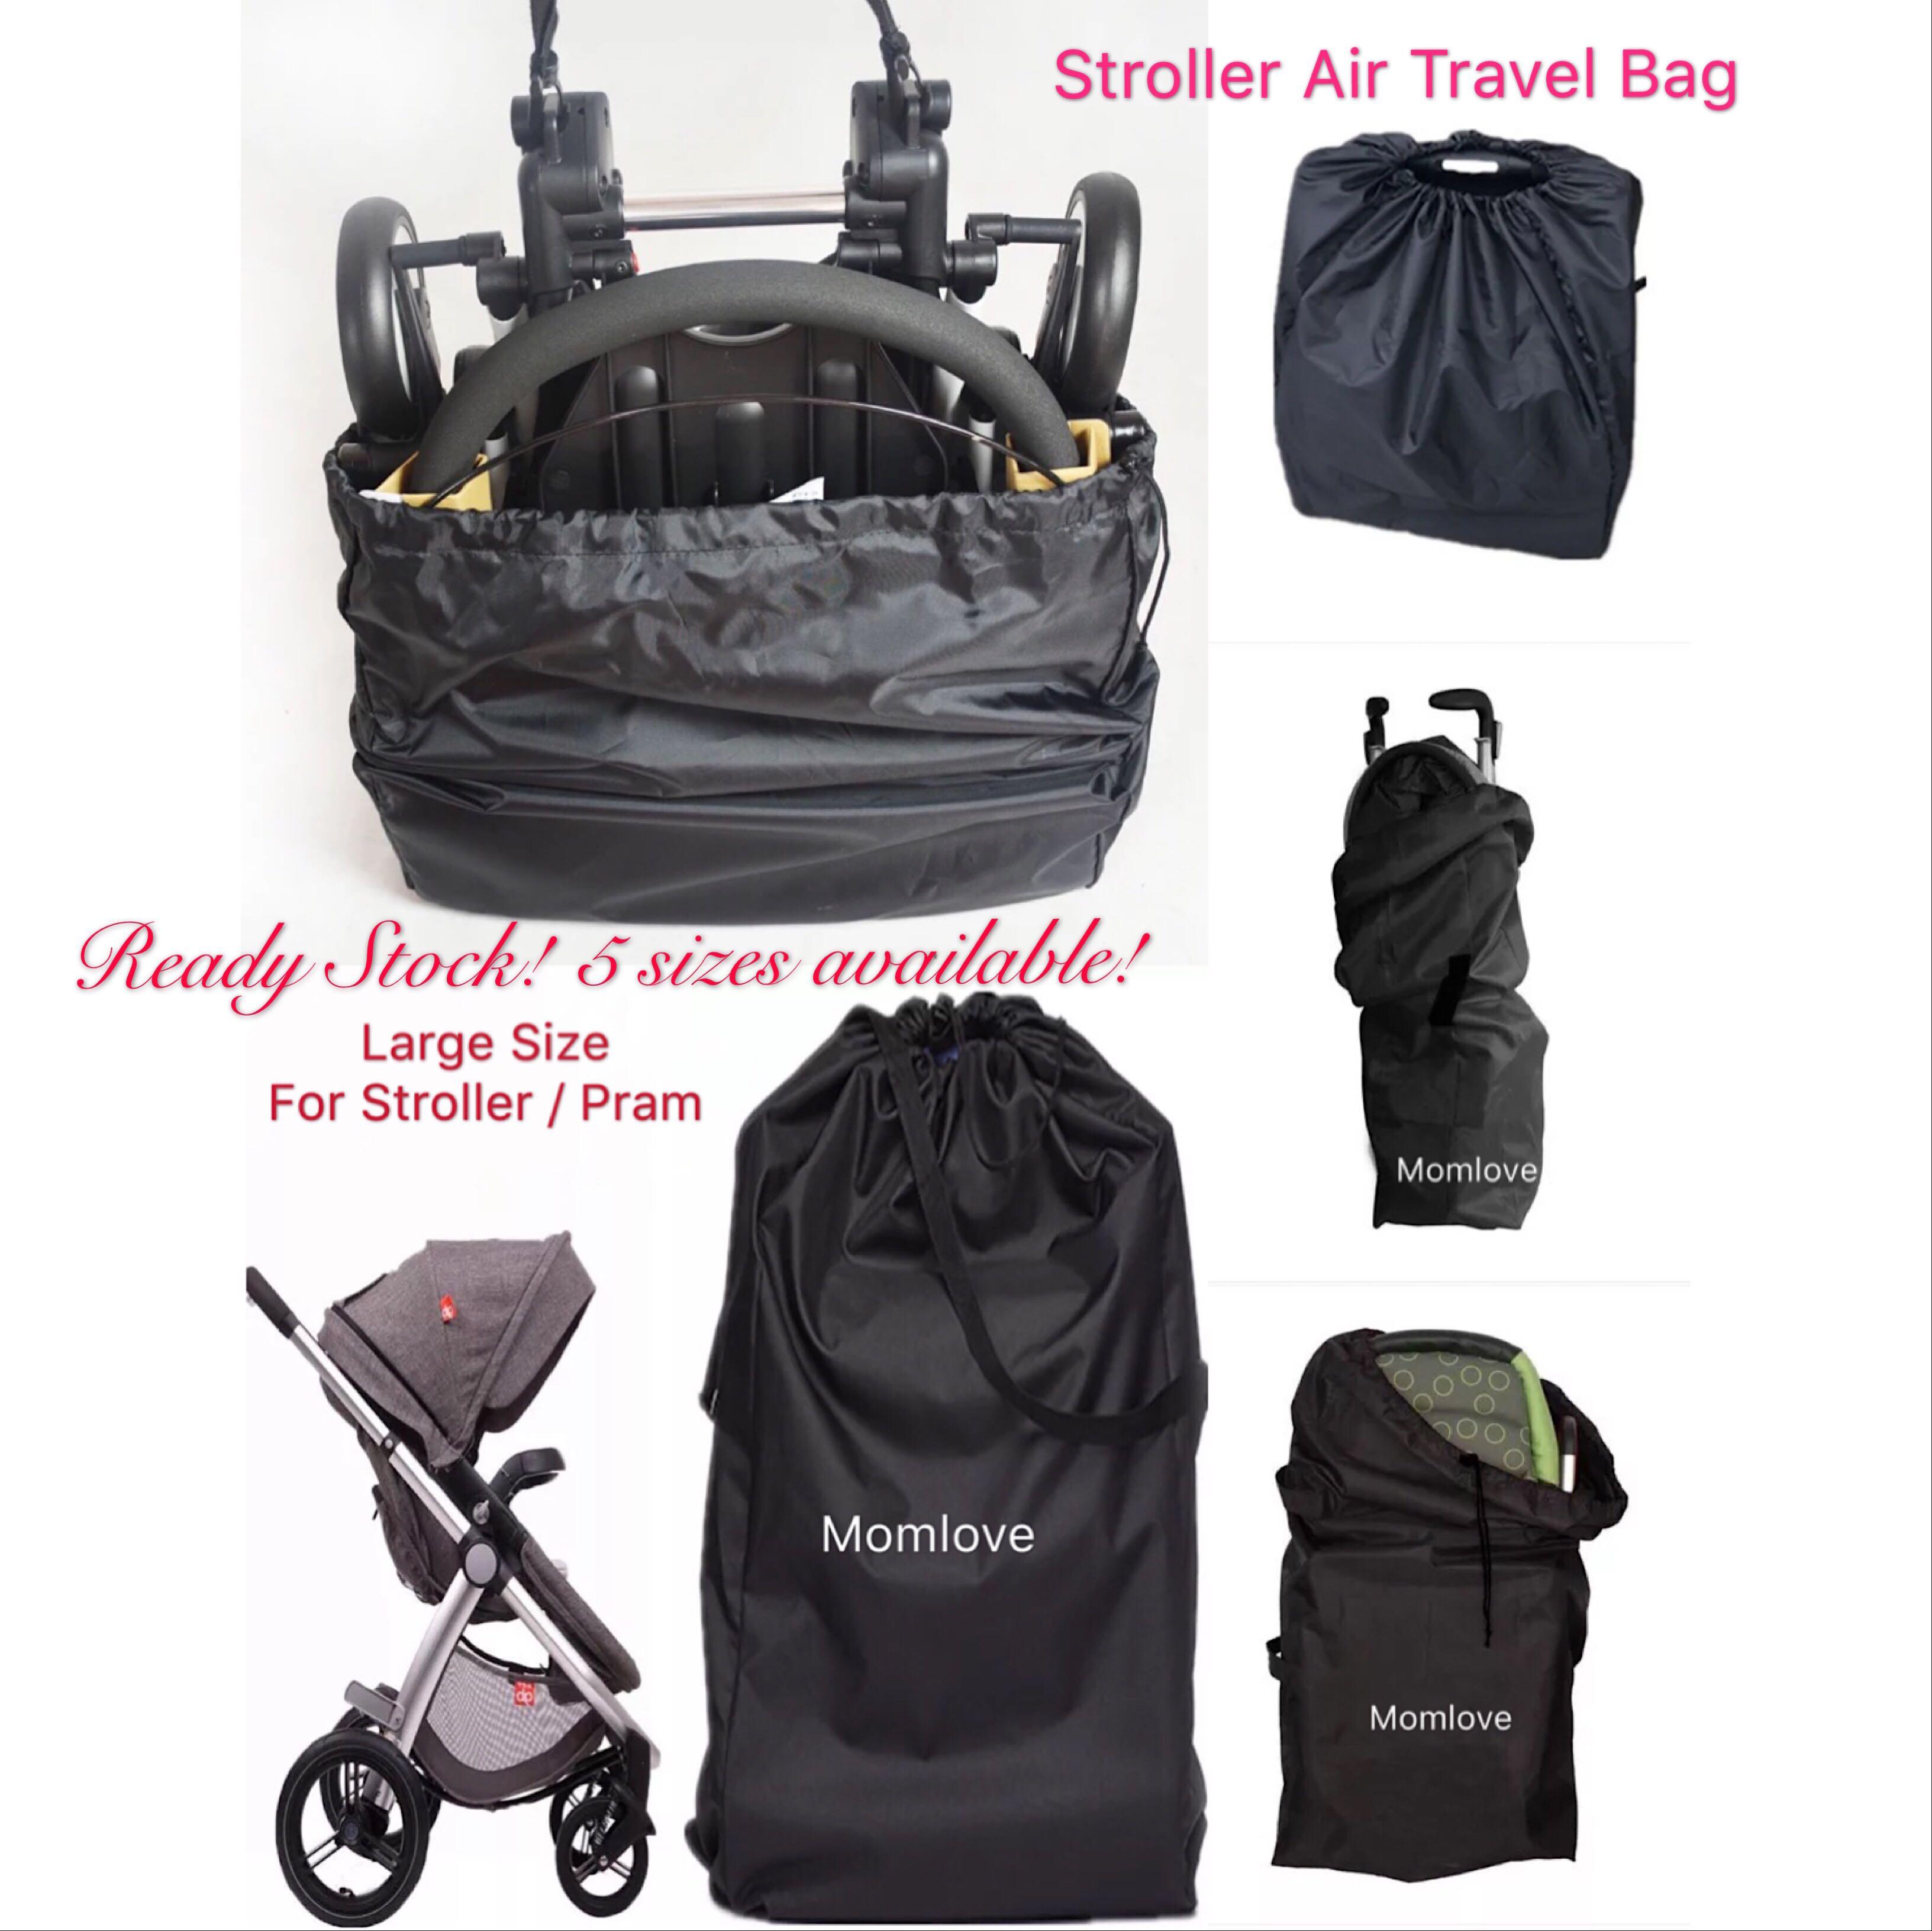 stroller bags for air travel